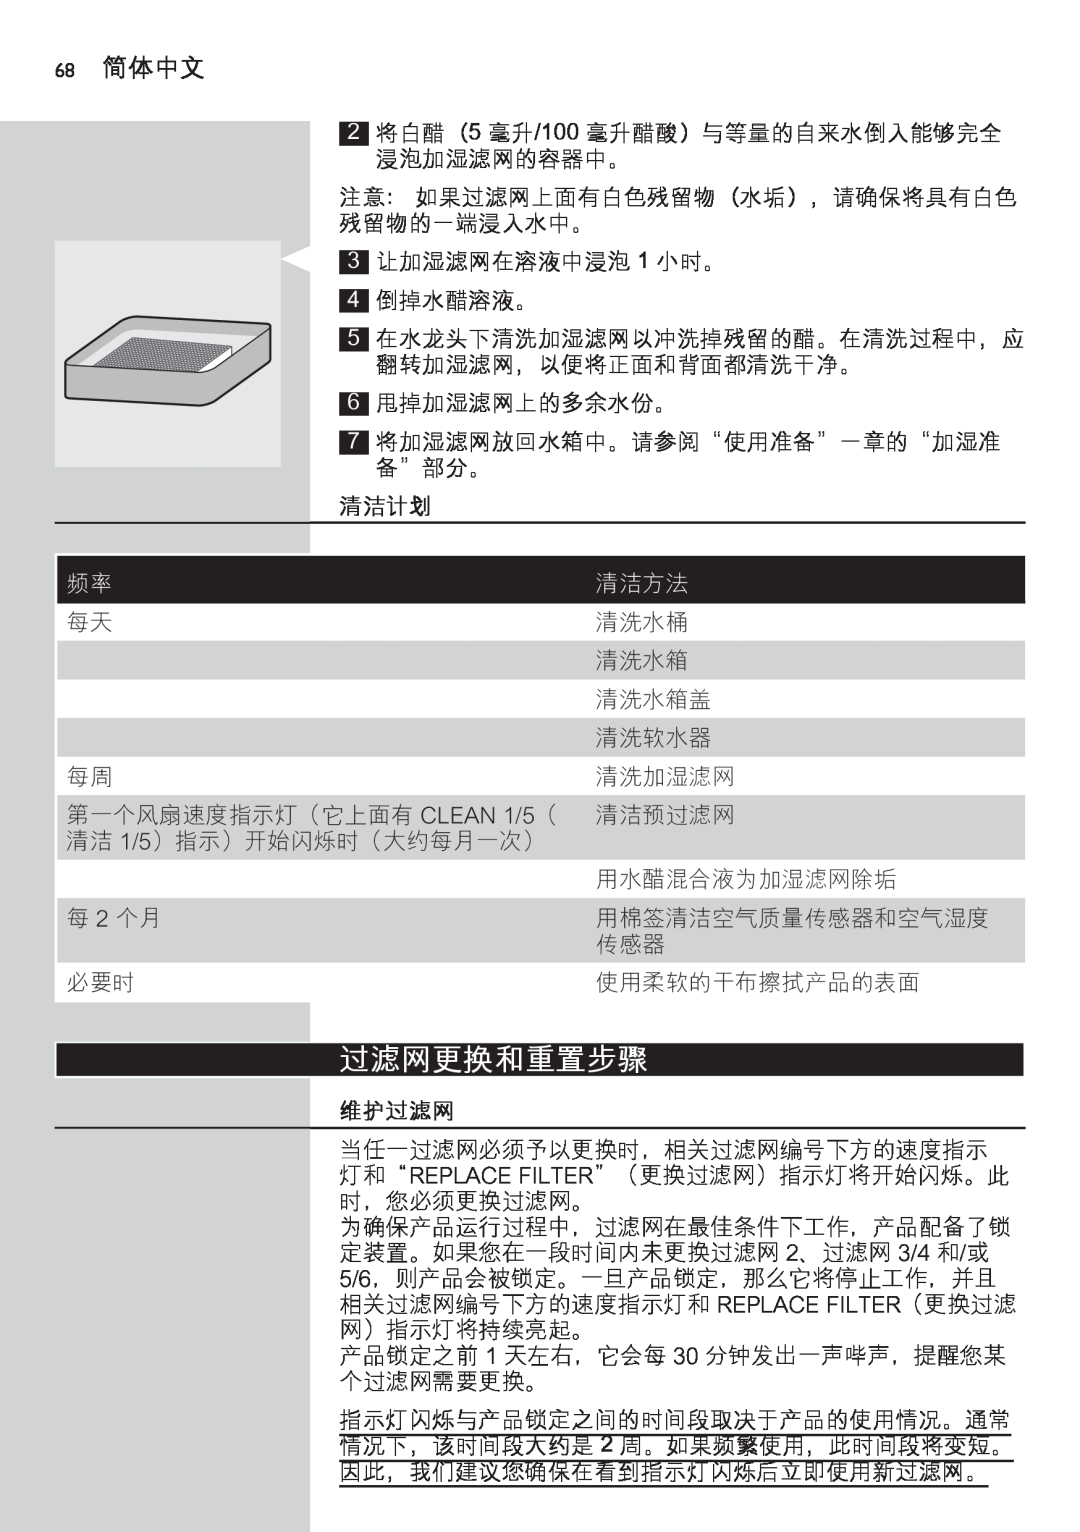 Philips AC4083 manual 过滤网更换和重置步骤, 68简体中文, 清洁计划, 清洁方法, 维护过滤网 